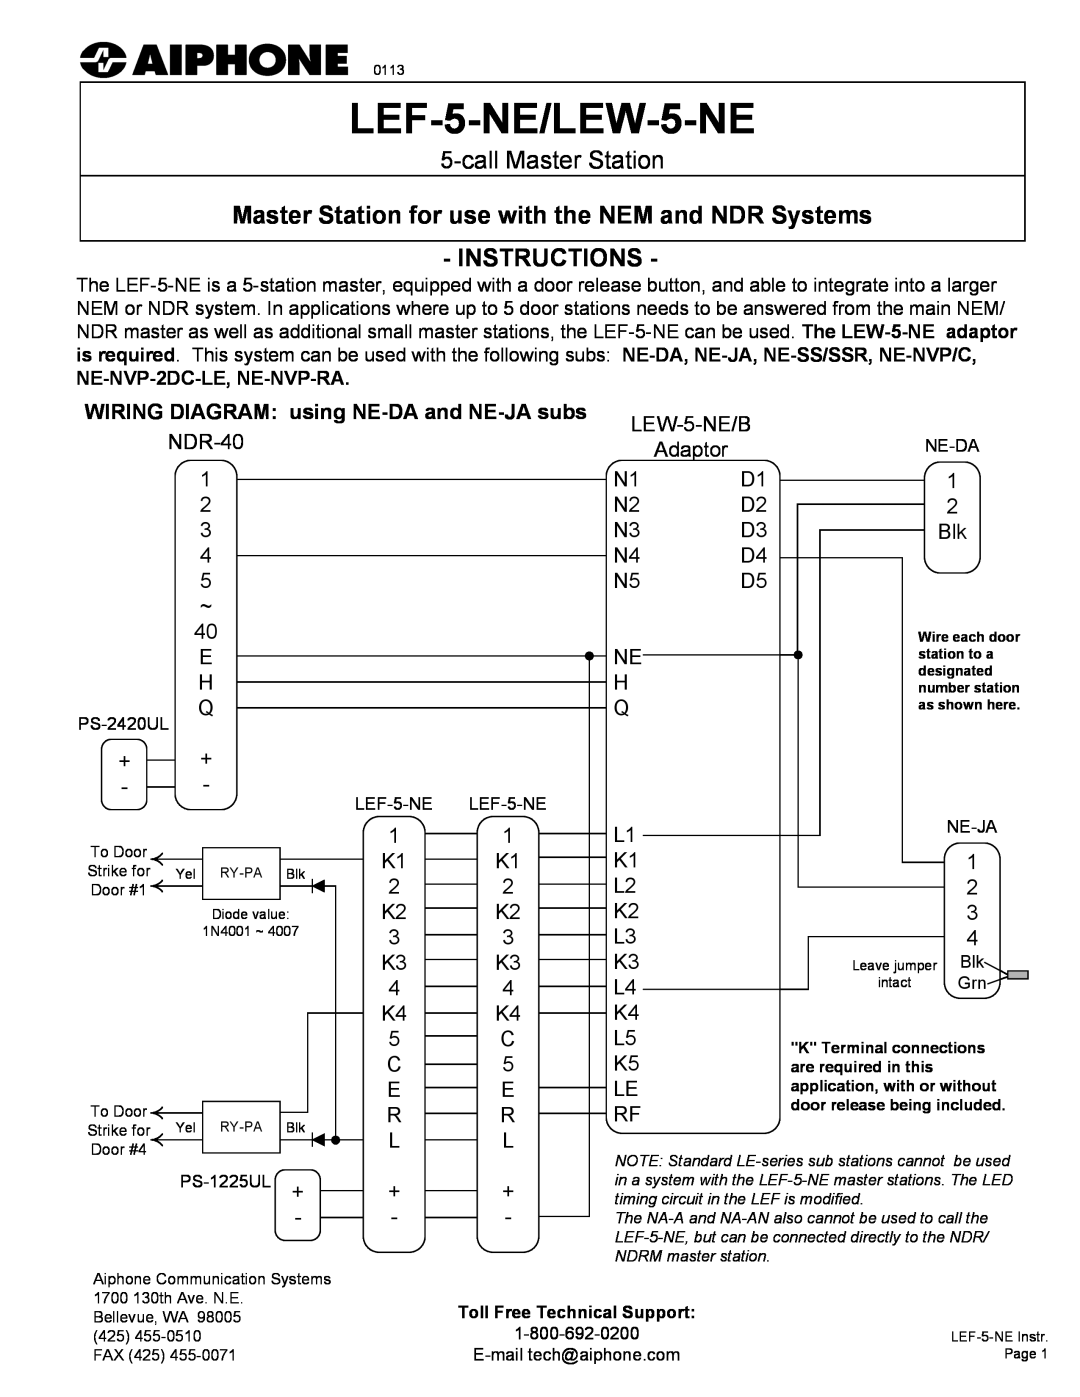 Aiphone manual WIRING DIAGRAM using NE-DAand NE-JAsubs, LEF-5-NE/LEW-5-NE, callMaster Station, Instructions 